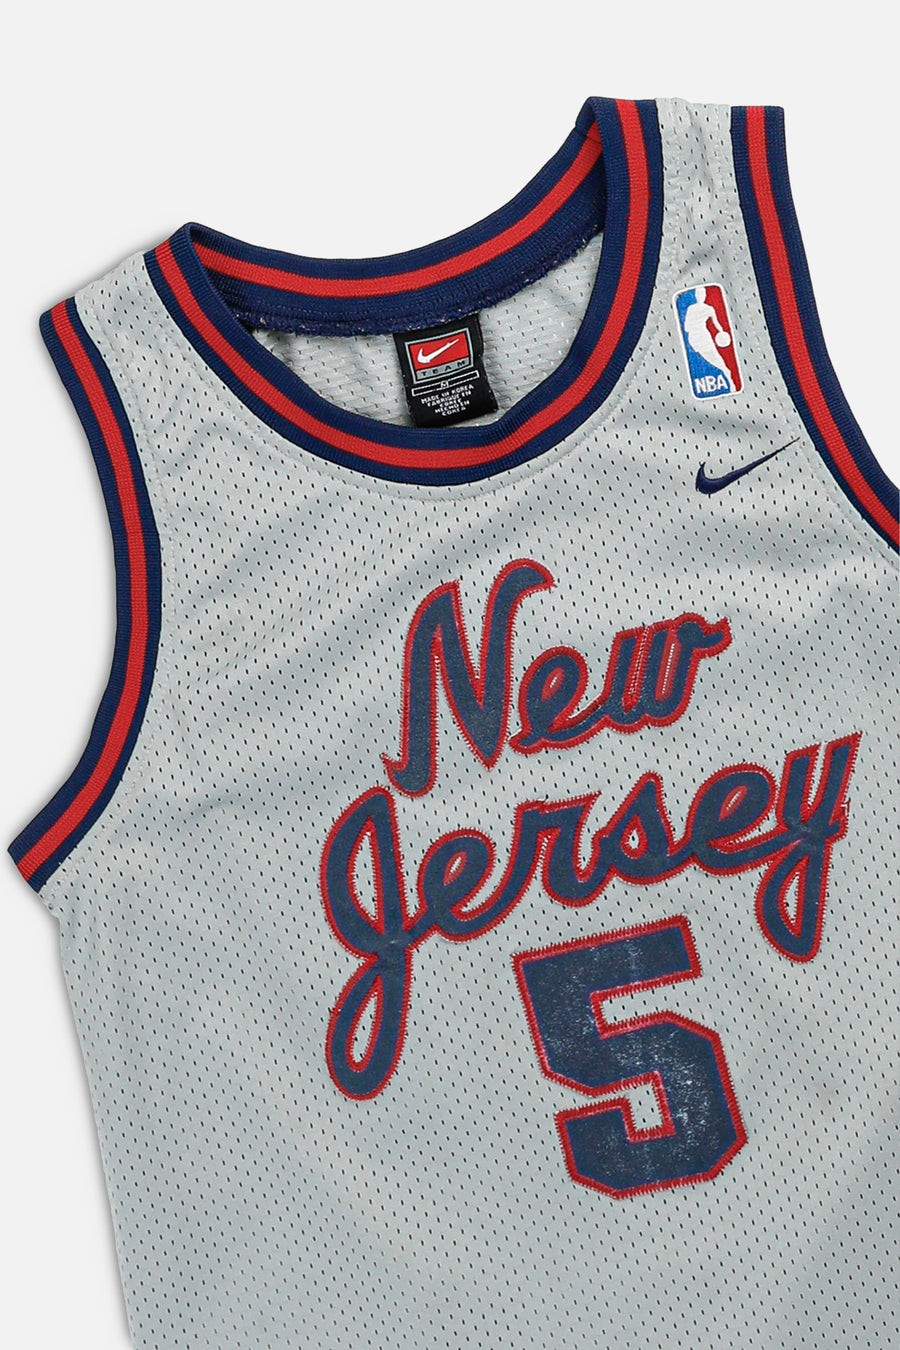 Vintage New Jersey Nets NBA Jersey - Women's XS